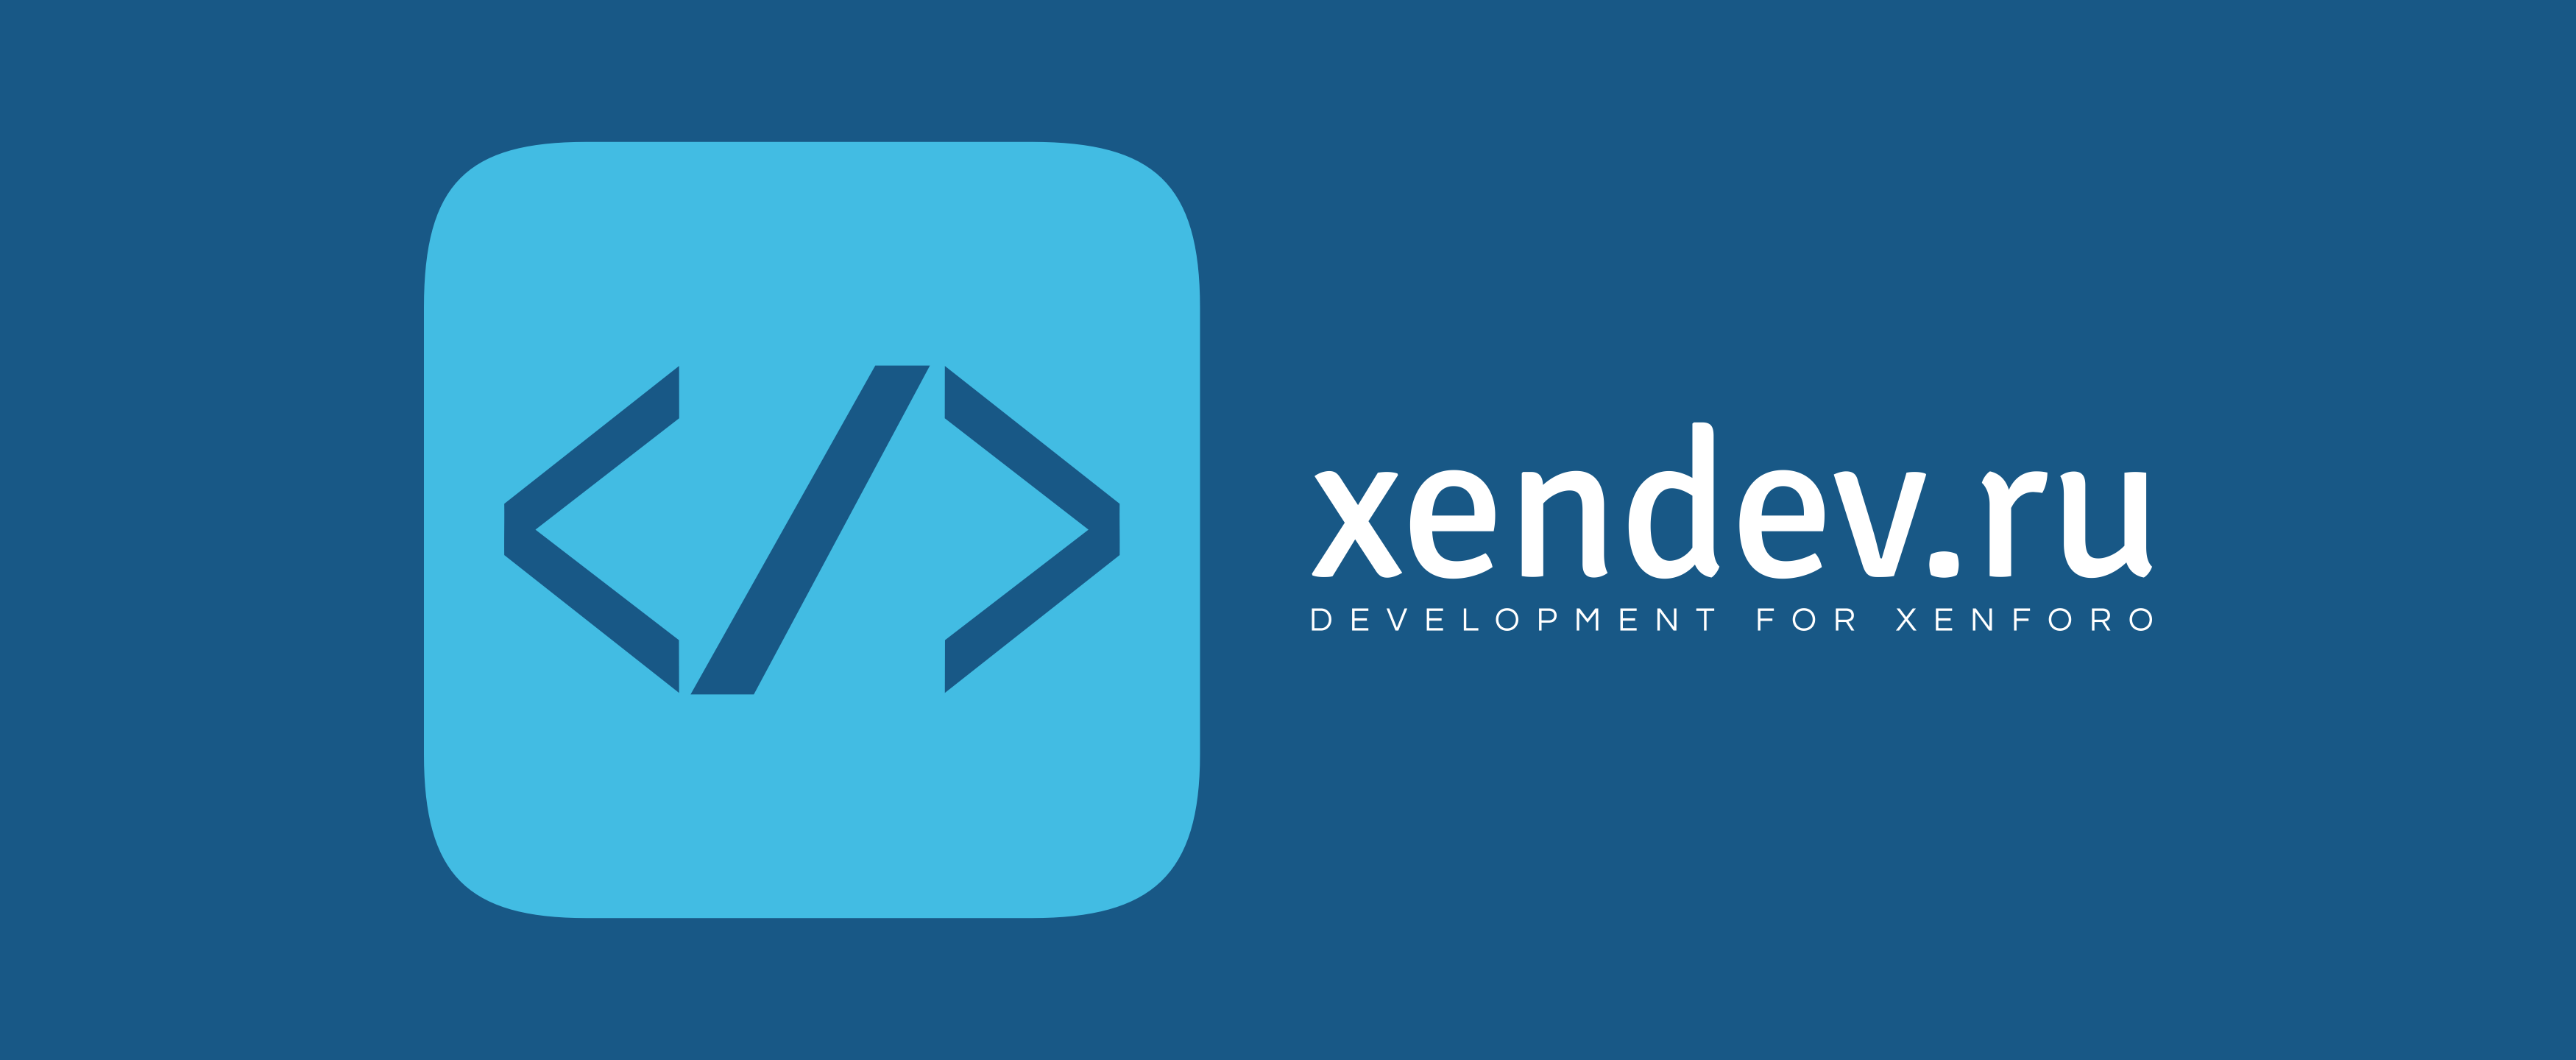 Development for XenForo